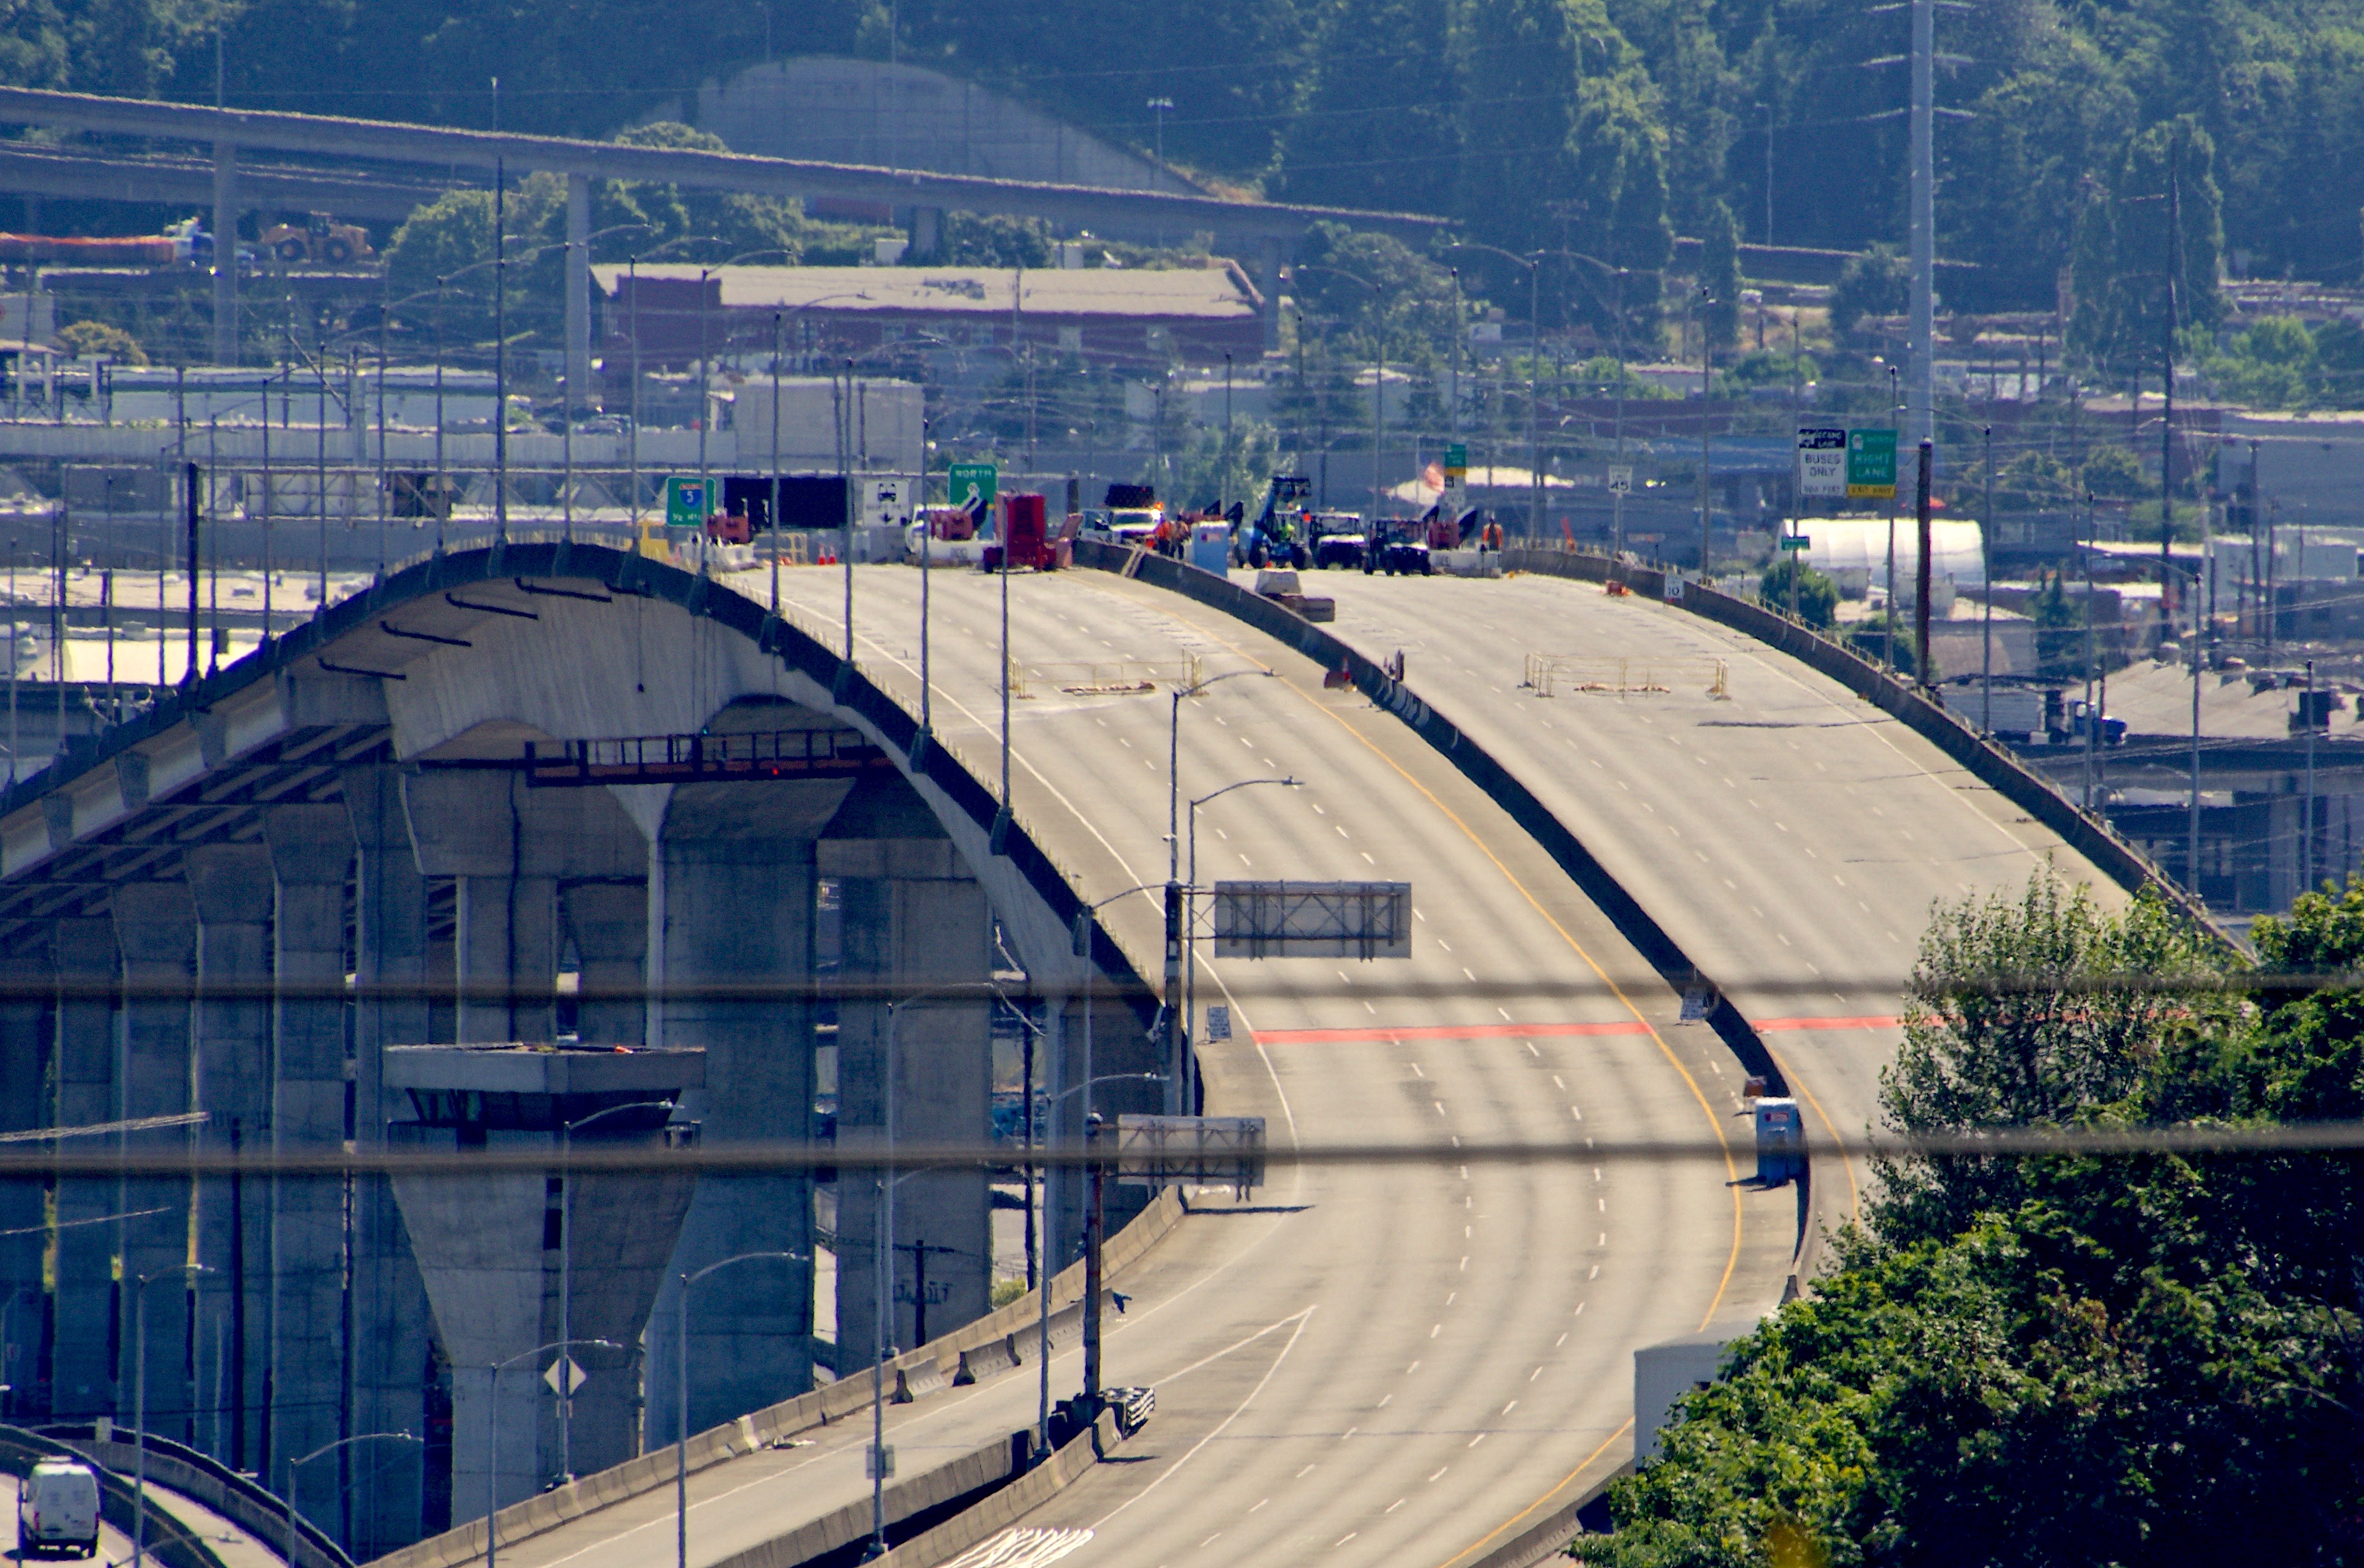 crews on top of the West Seattle Bridge